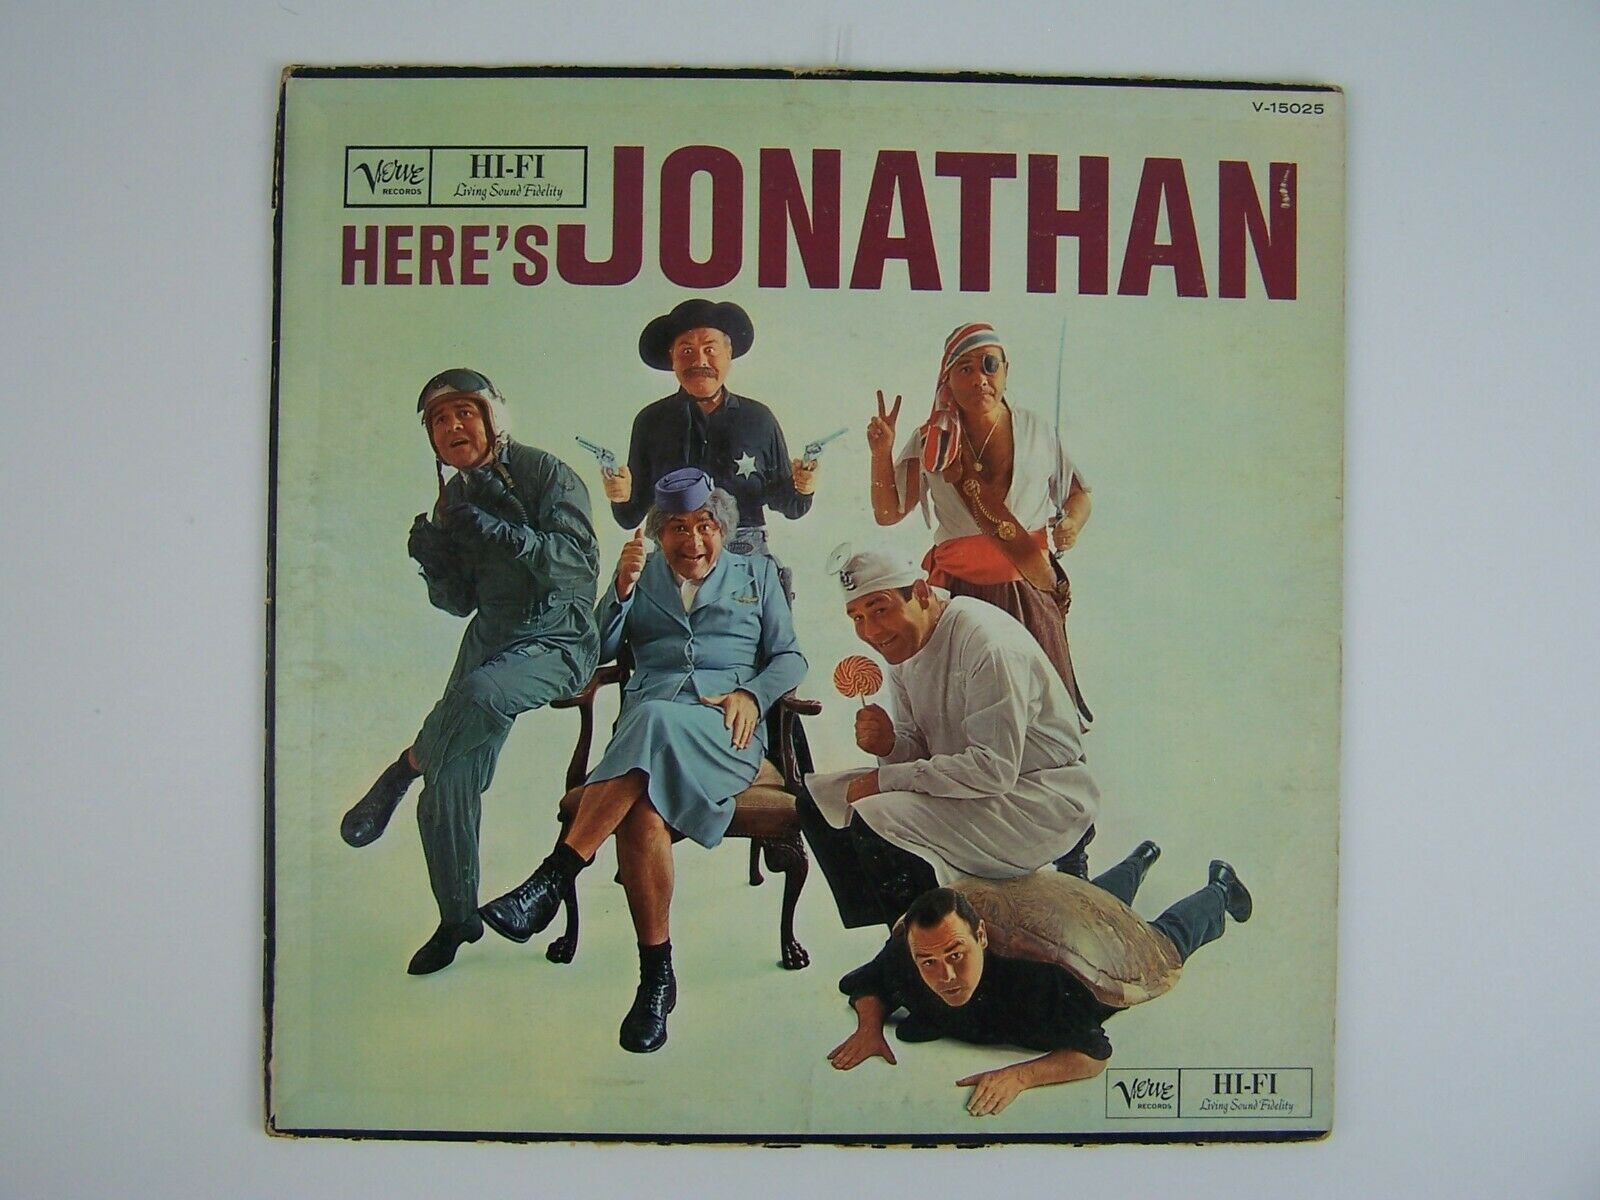 Primary image for Jonathan Winters – Here's Jonathan Vinyl LP Record Album V-15025